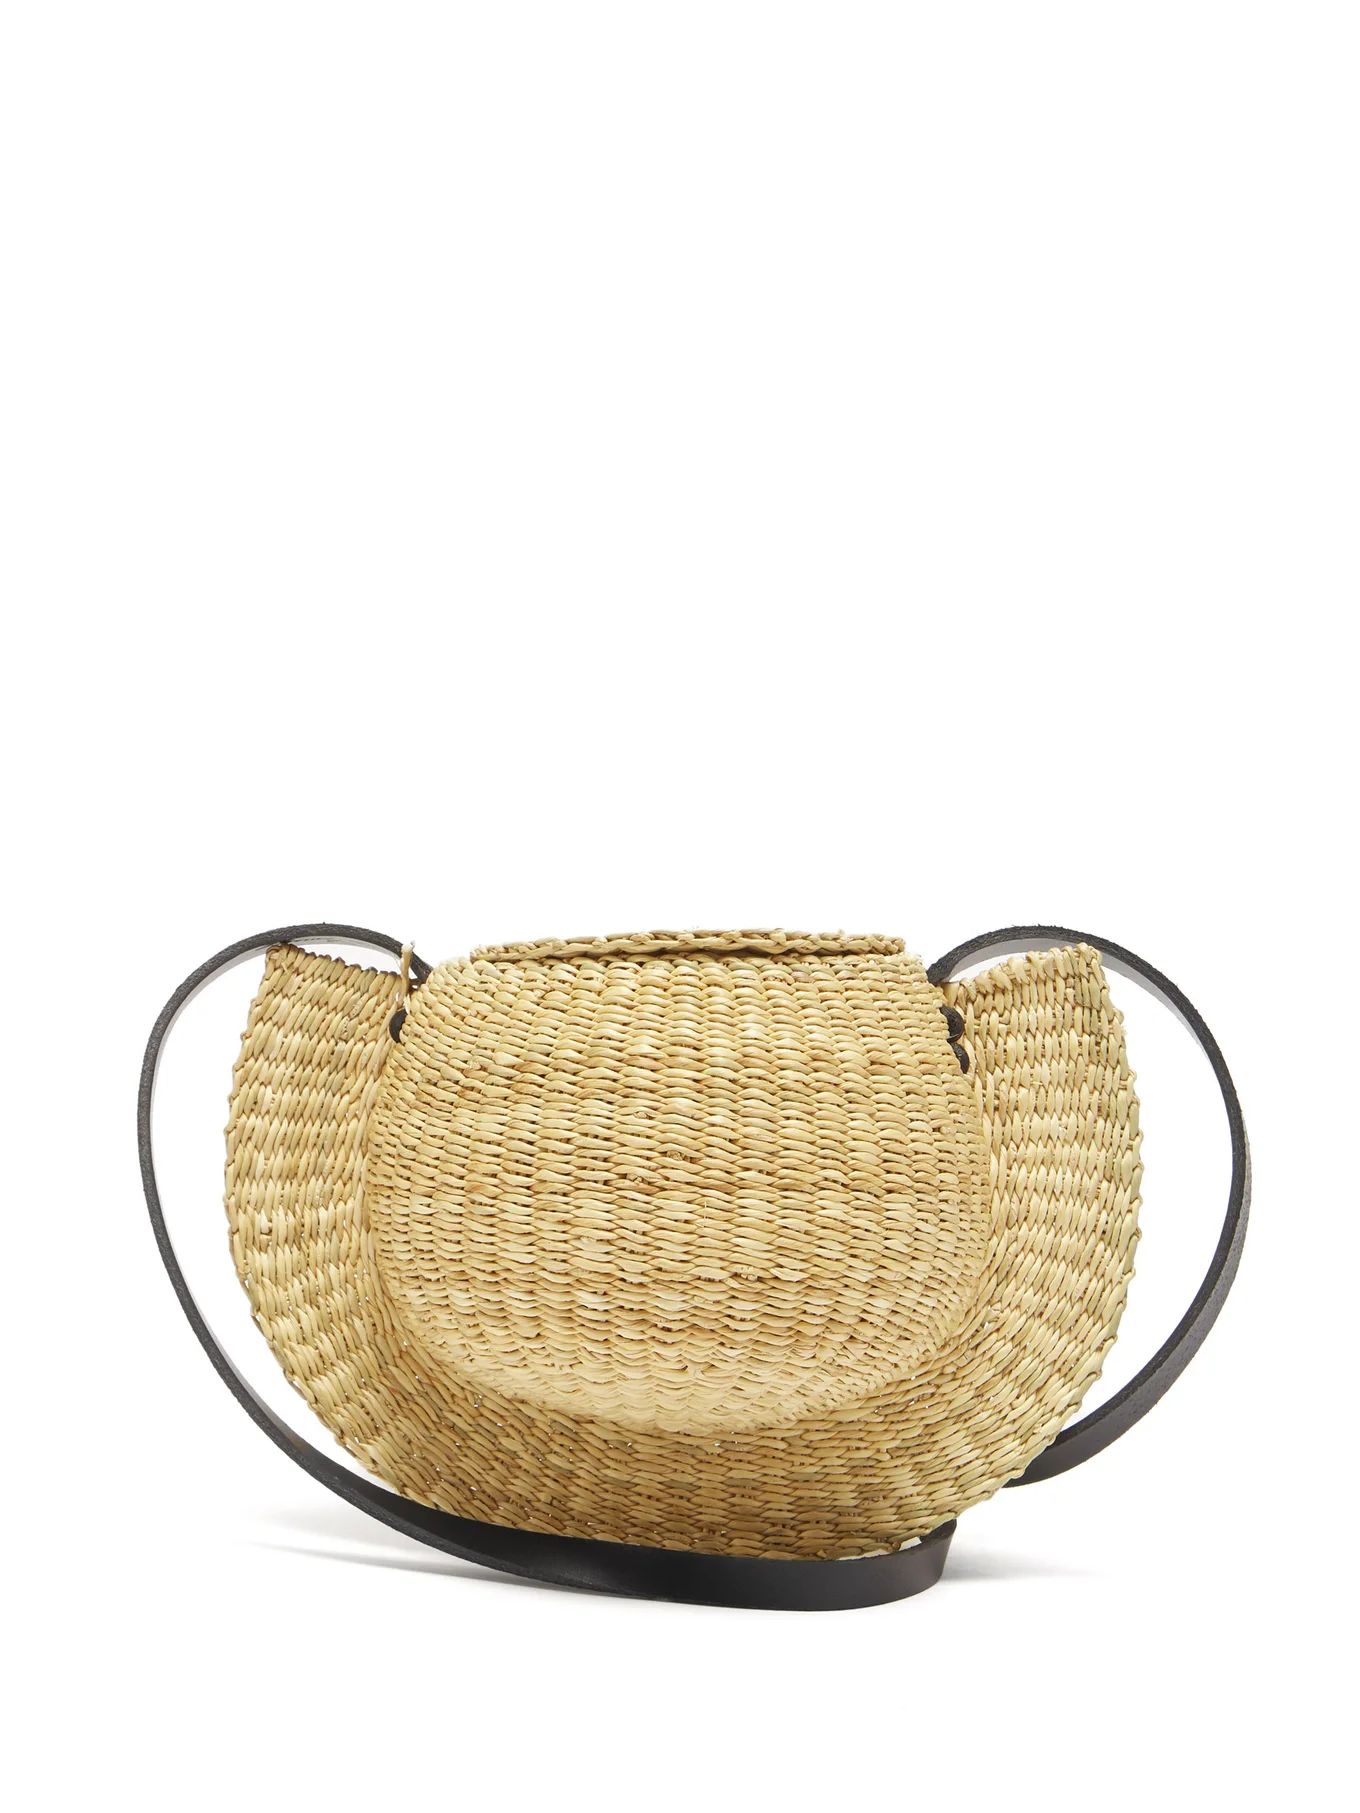 N.25 Mini Glob straw basket bag | Inès Bressand | Matches (US)